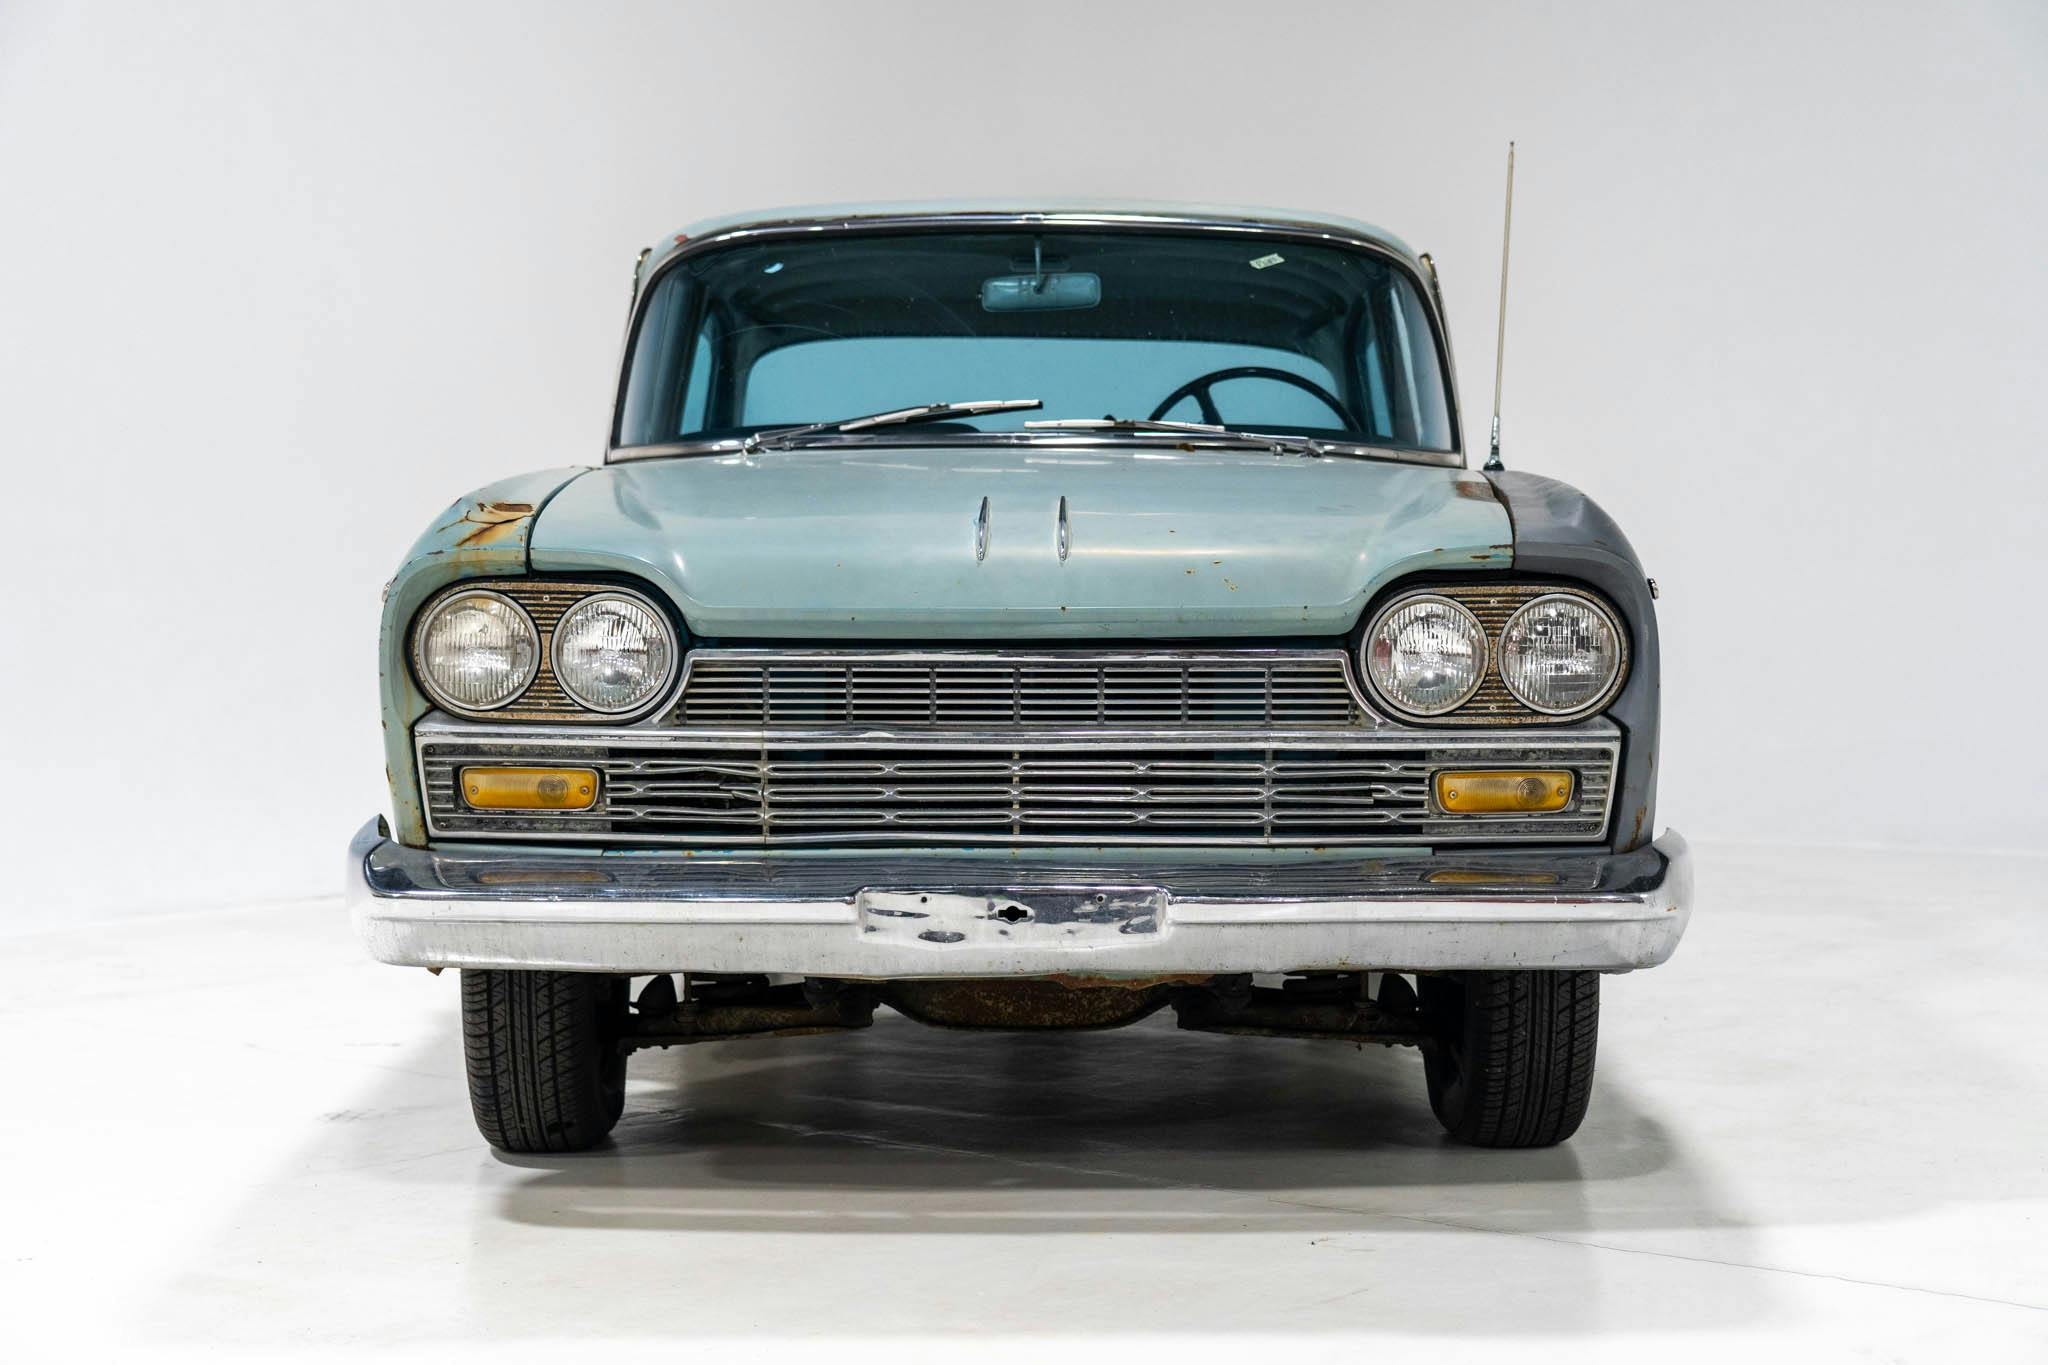 1964 Nissan Cedric unrestored front